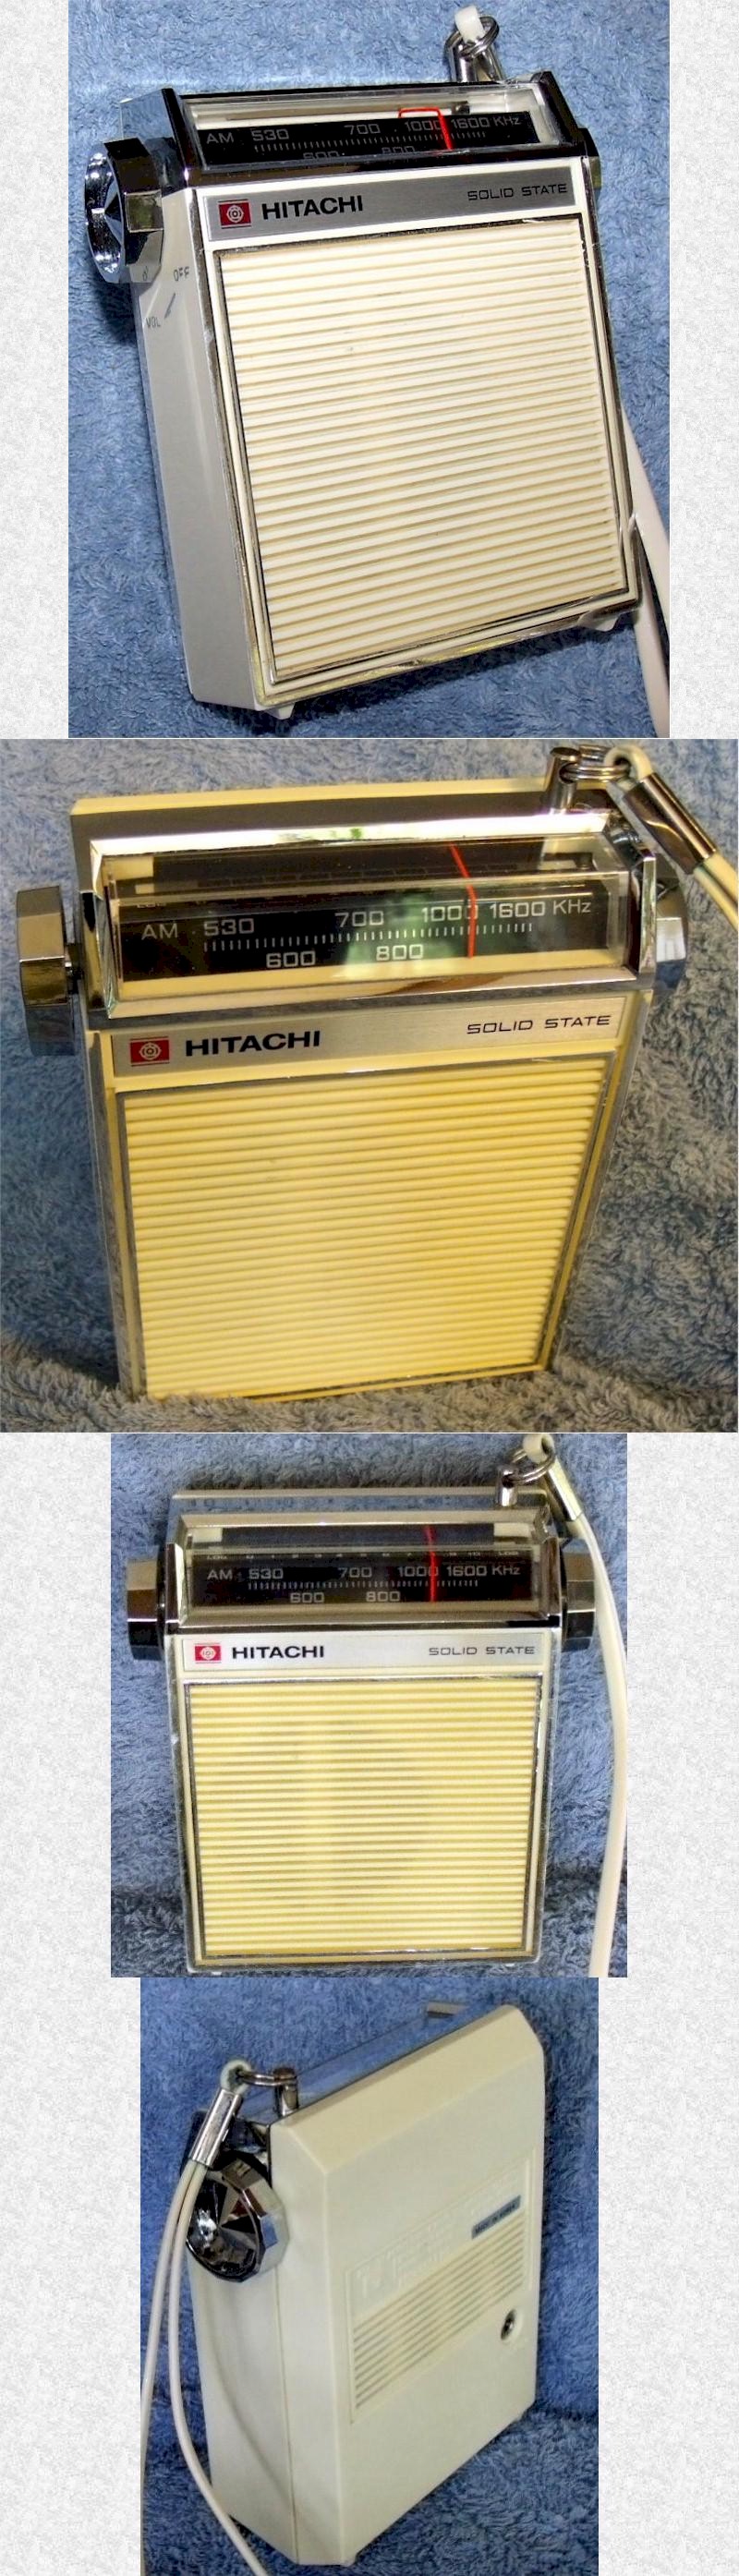 Hitachi TH-831 